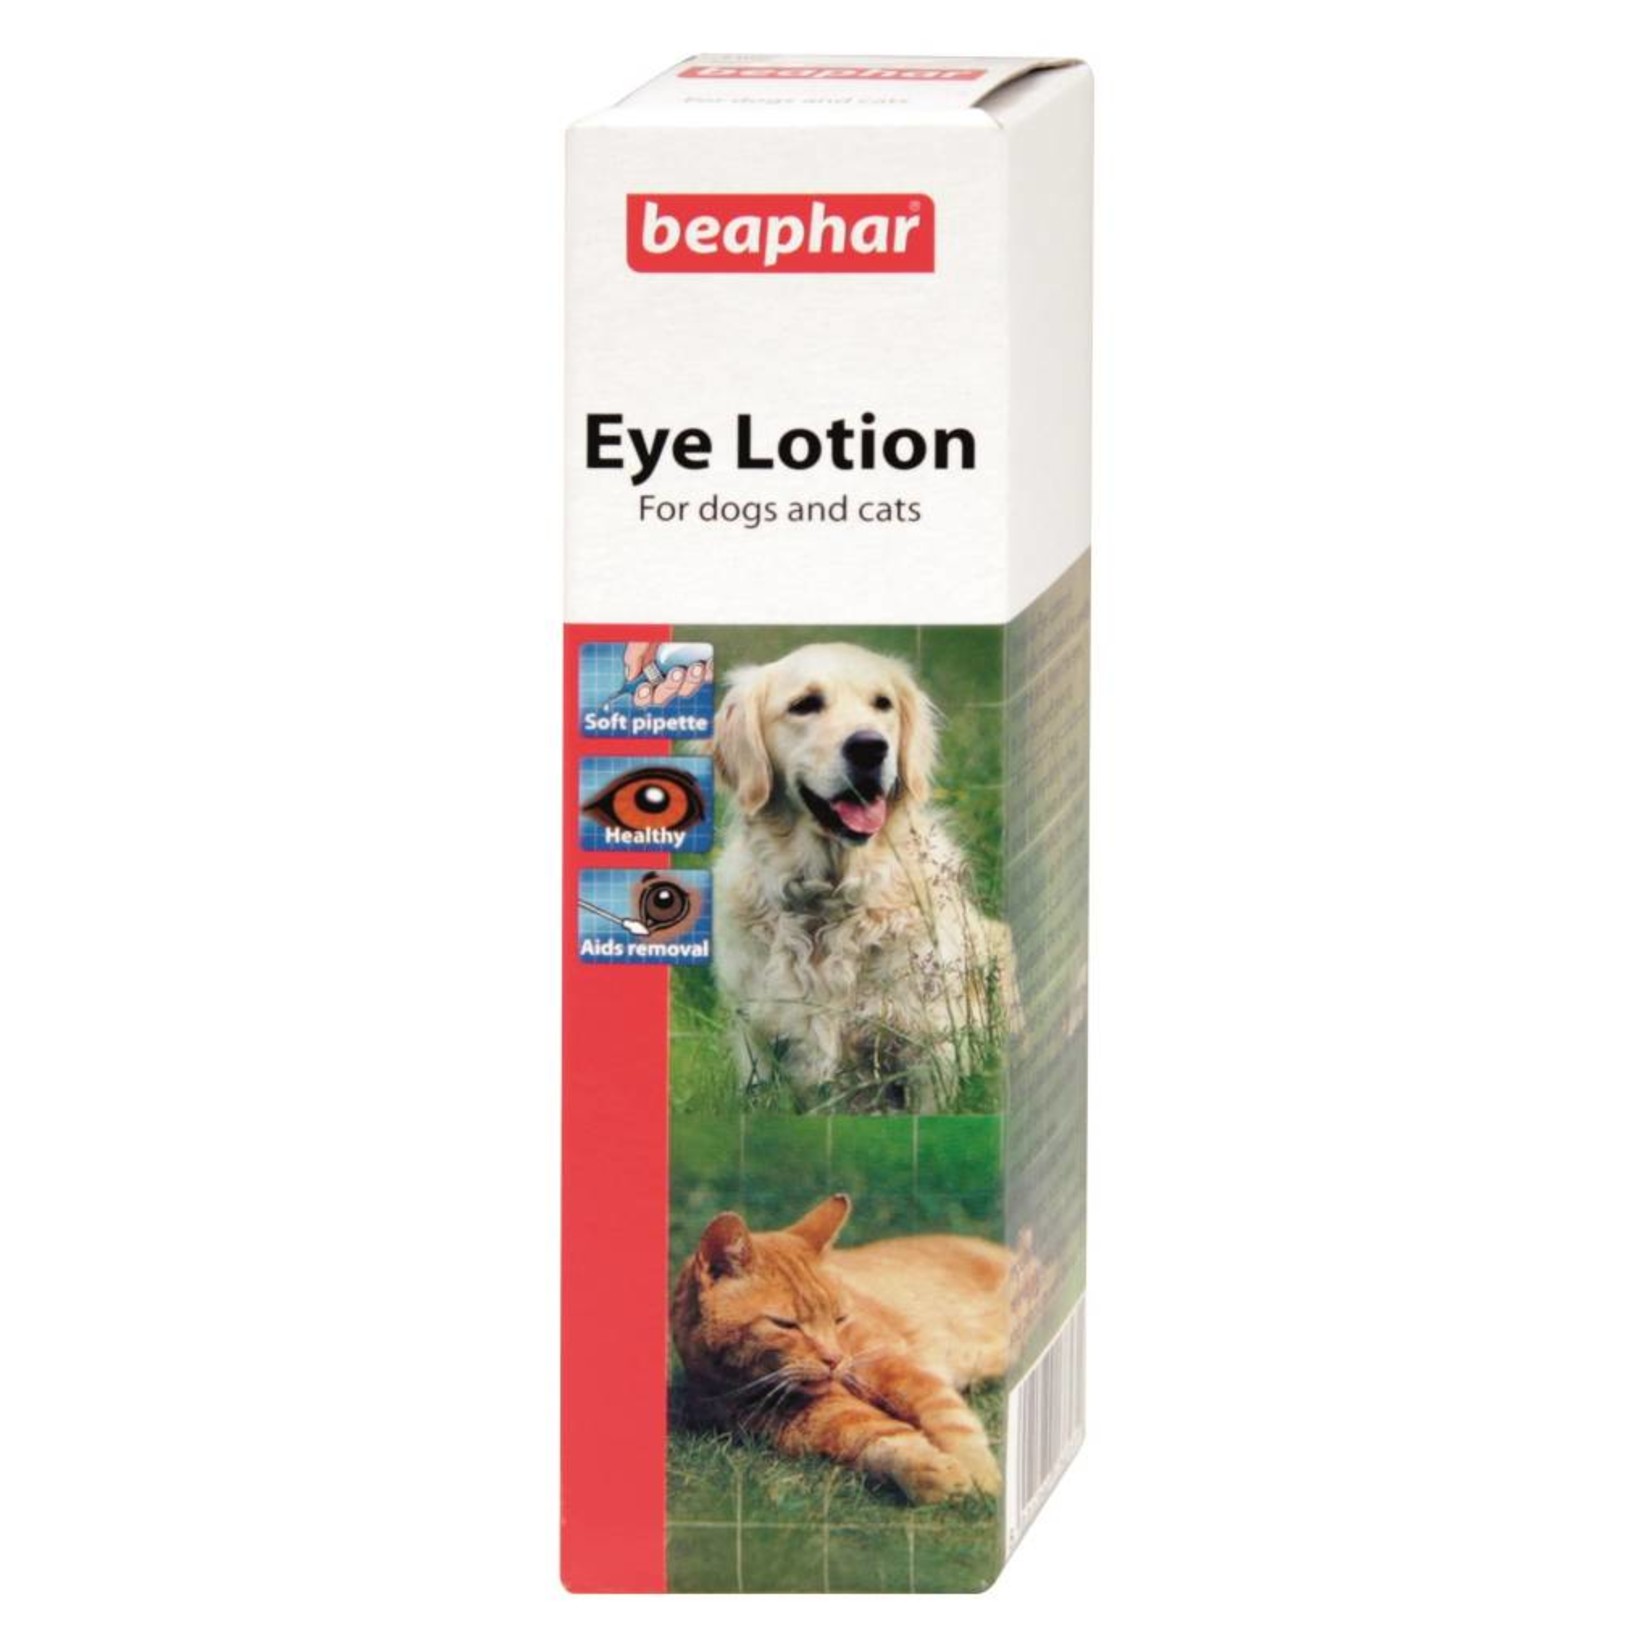 Beaphar Eye Lotion for Cats & Dogs, 50ml